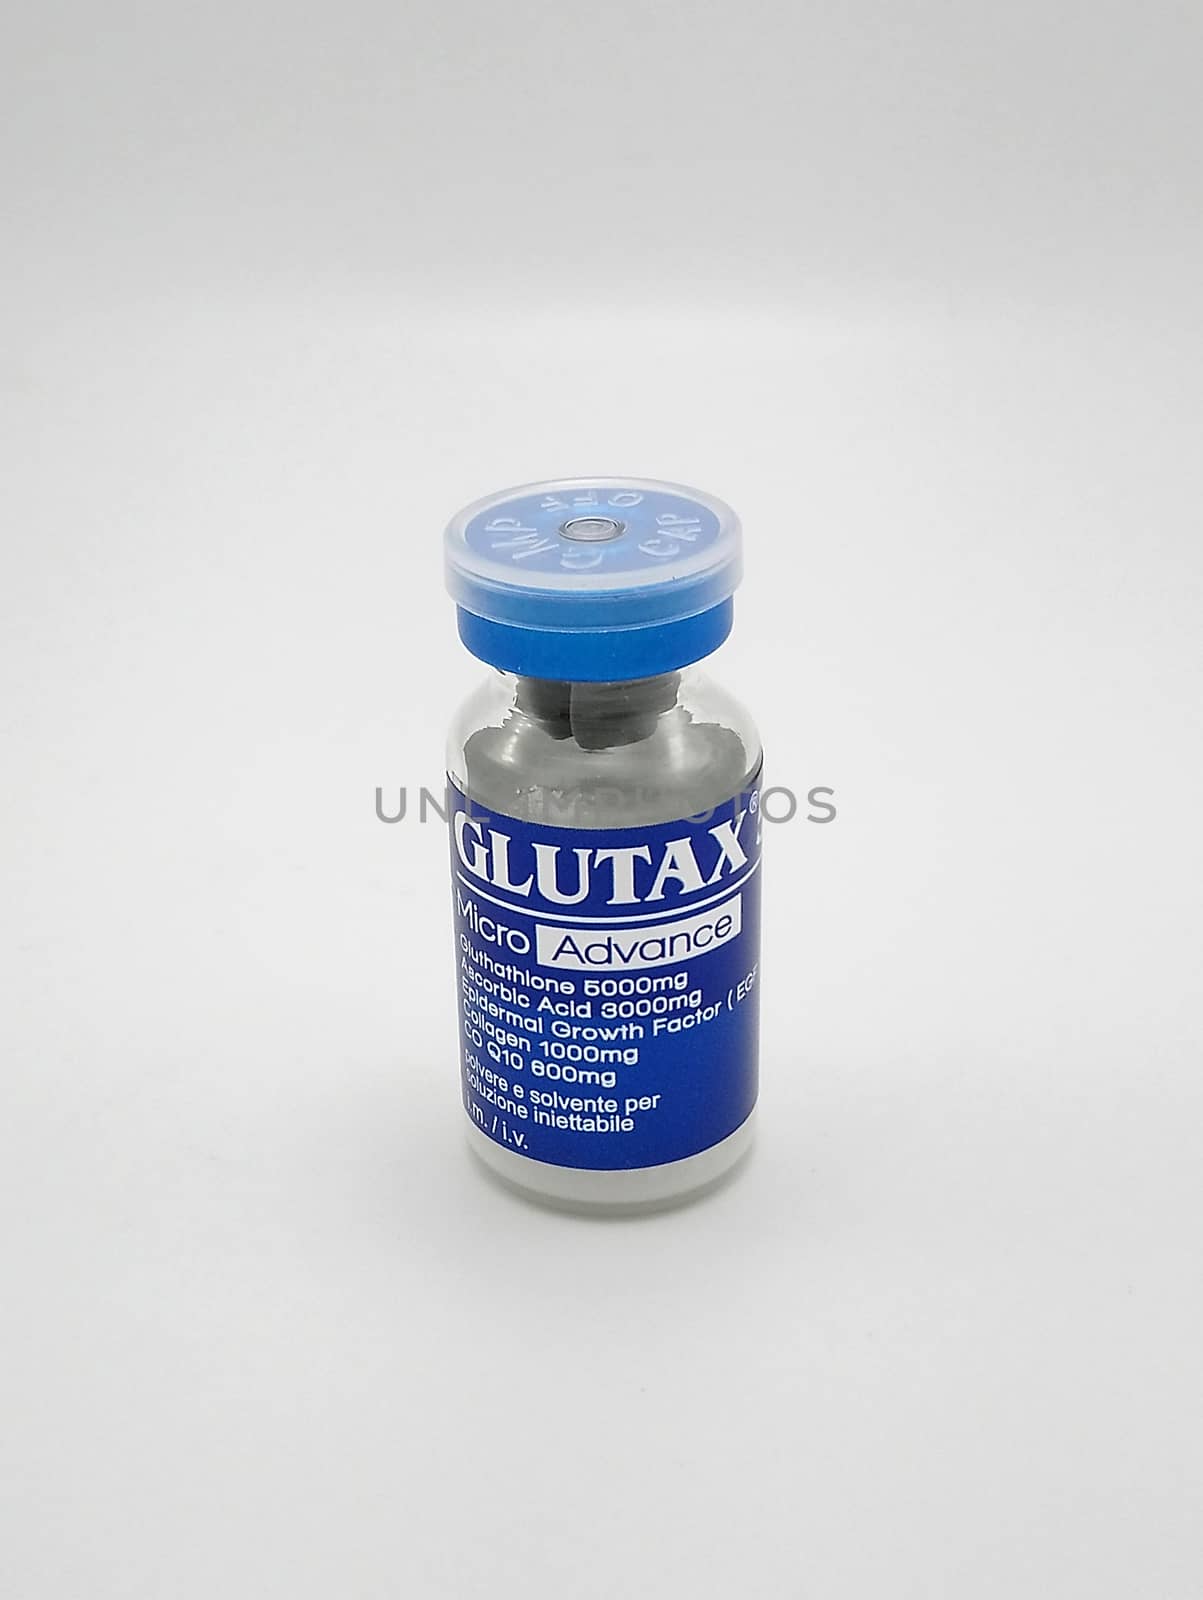 MANILA, PH - SEPT 25 - Glutax glutathione vial on September 25, 2020 in Manila, Philippines.